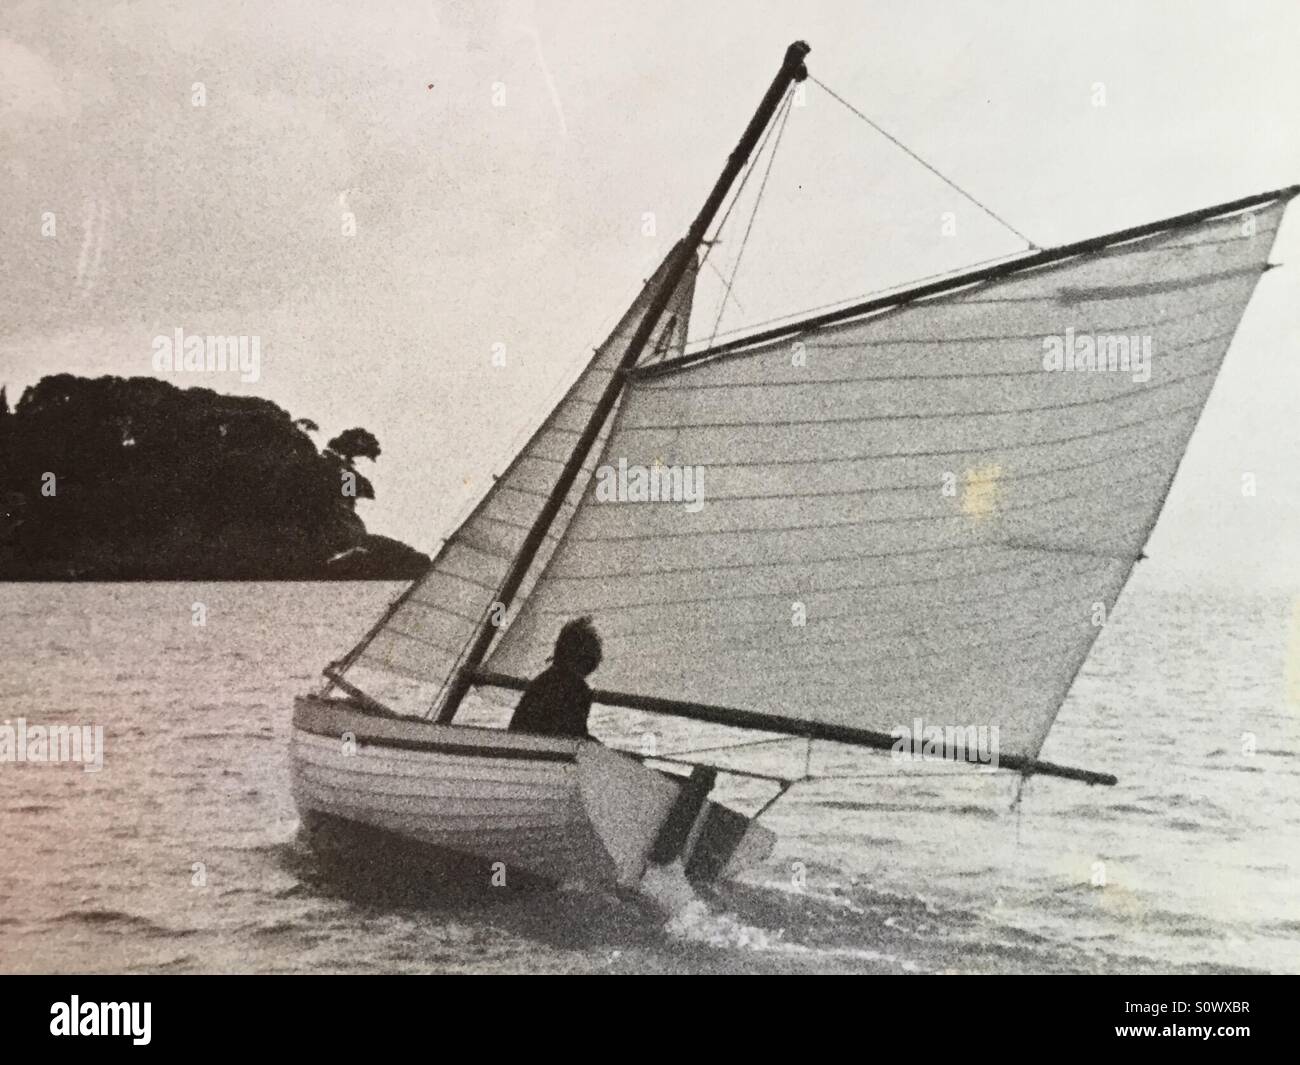 Sailing a small wooden gaff rigged boat to windward Stock Photo